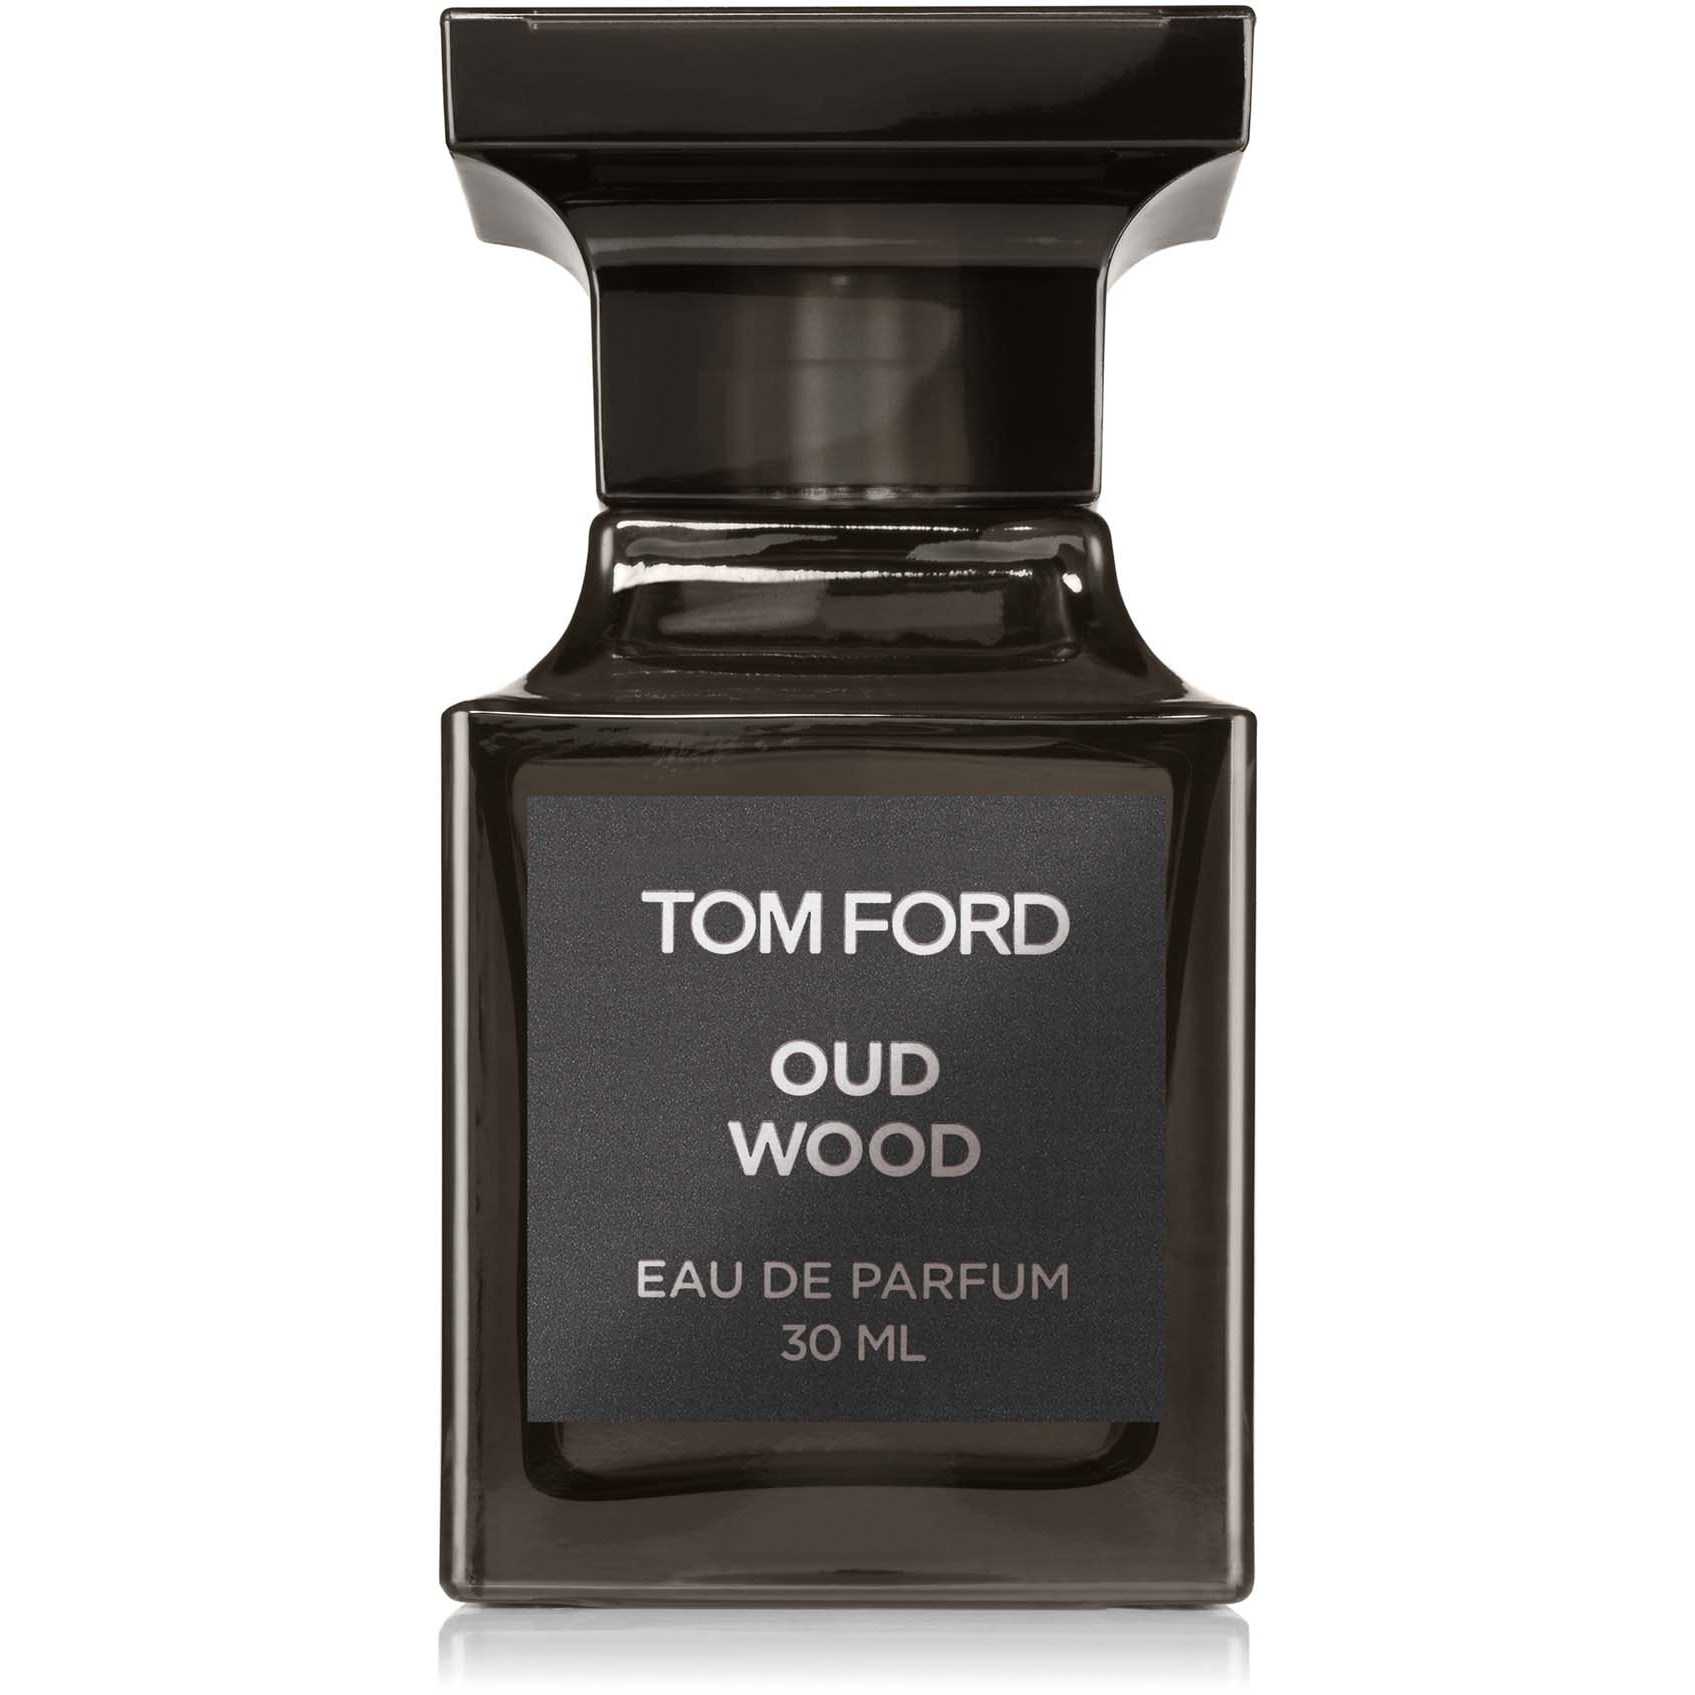 TOM FORD Oud Wood Eau de Parfum 30 ml